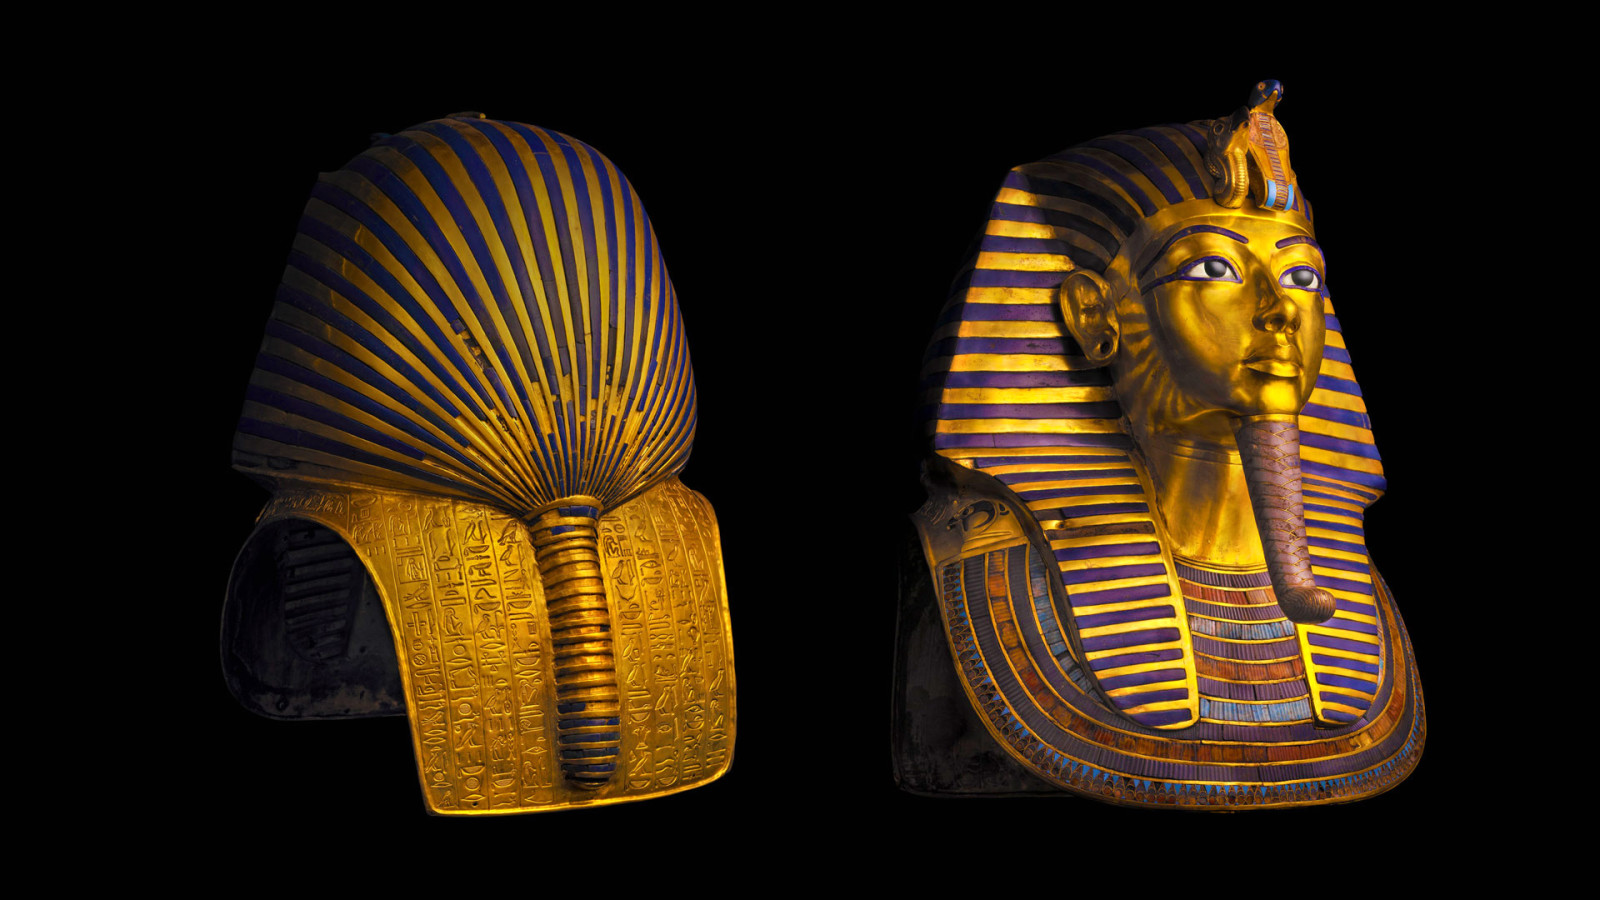 Ai Cập, Pharaoh, Bảo tàng Cairo, mặt nạ của Tutankhamun